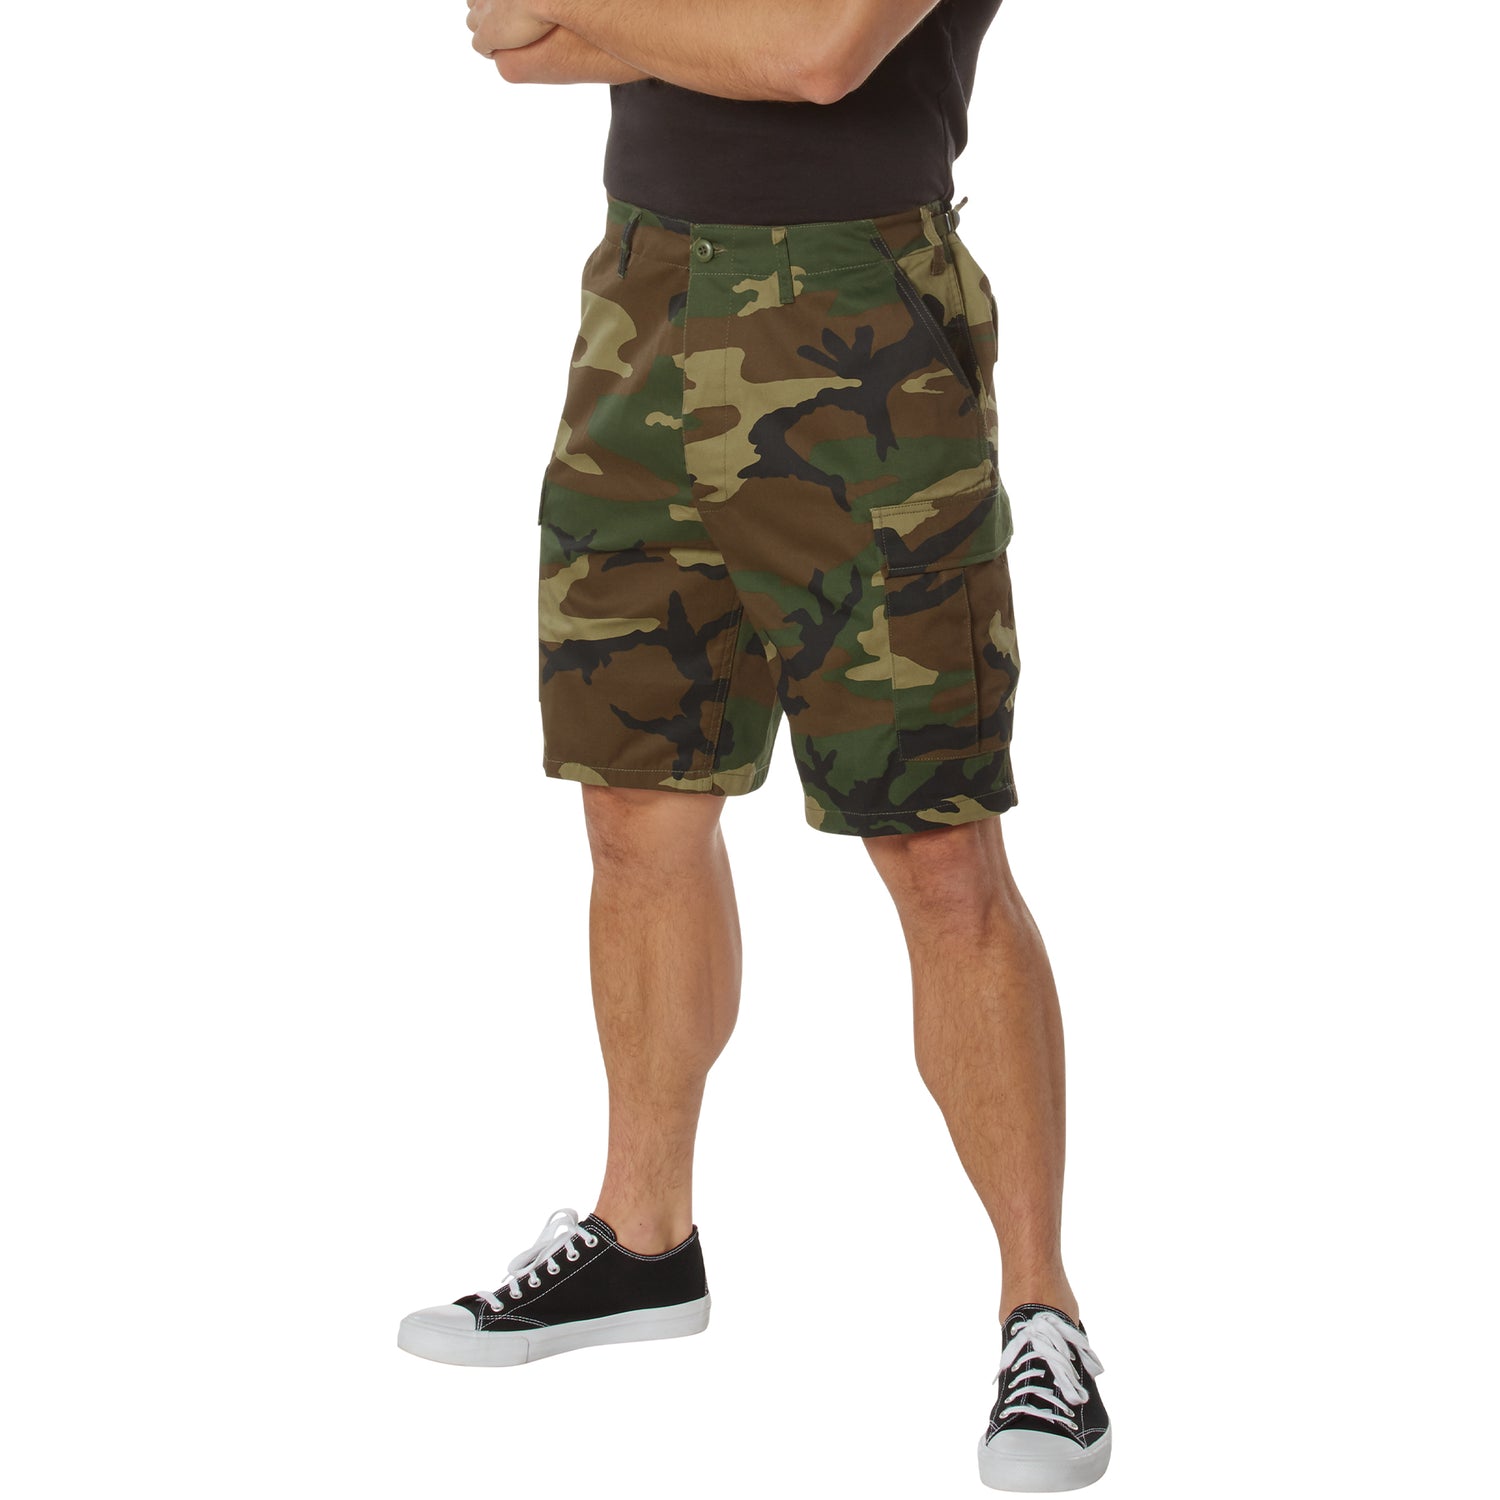 Shop Coyote Brown GEN III Silk Weight Bottoms - Fatigues Army Navy Gear